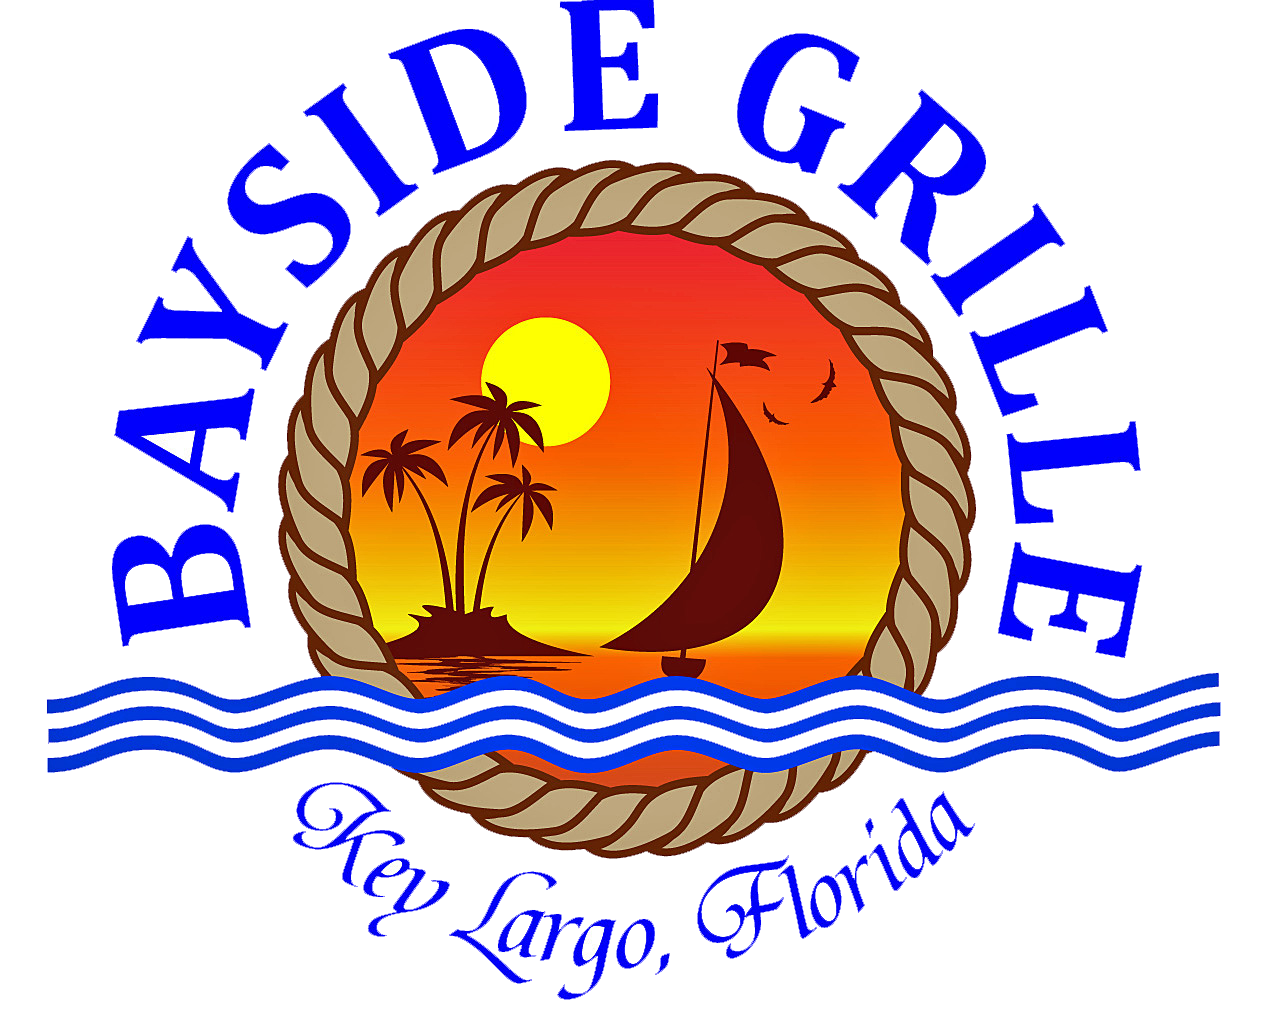 Bayside Grille & Sunset Bar